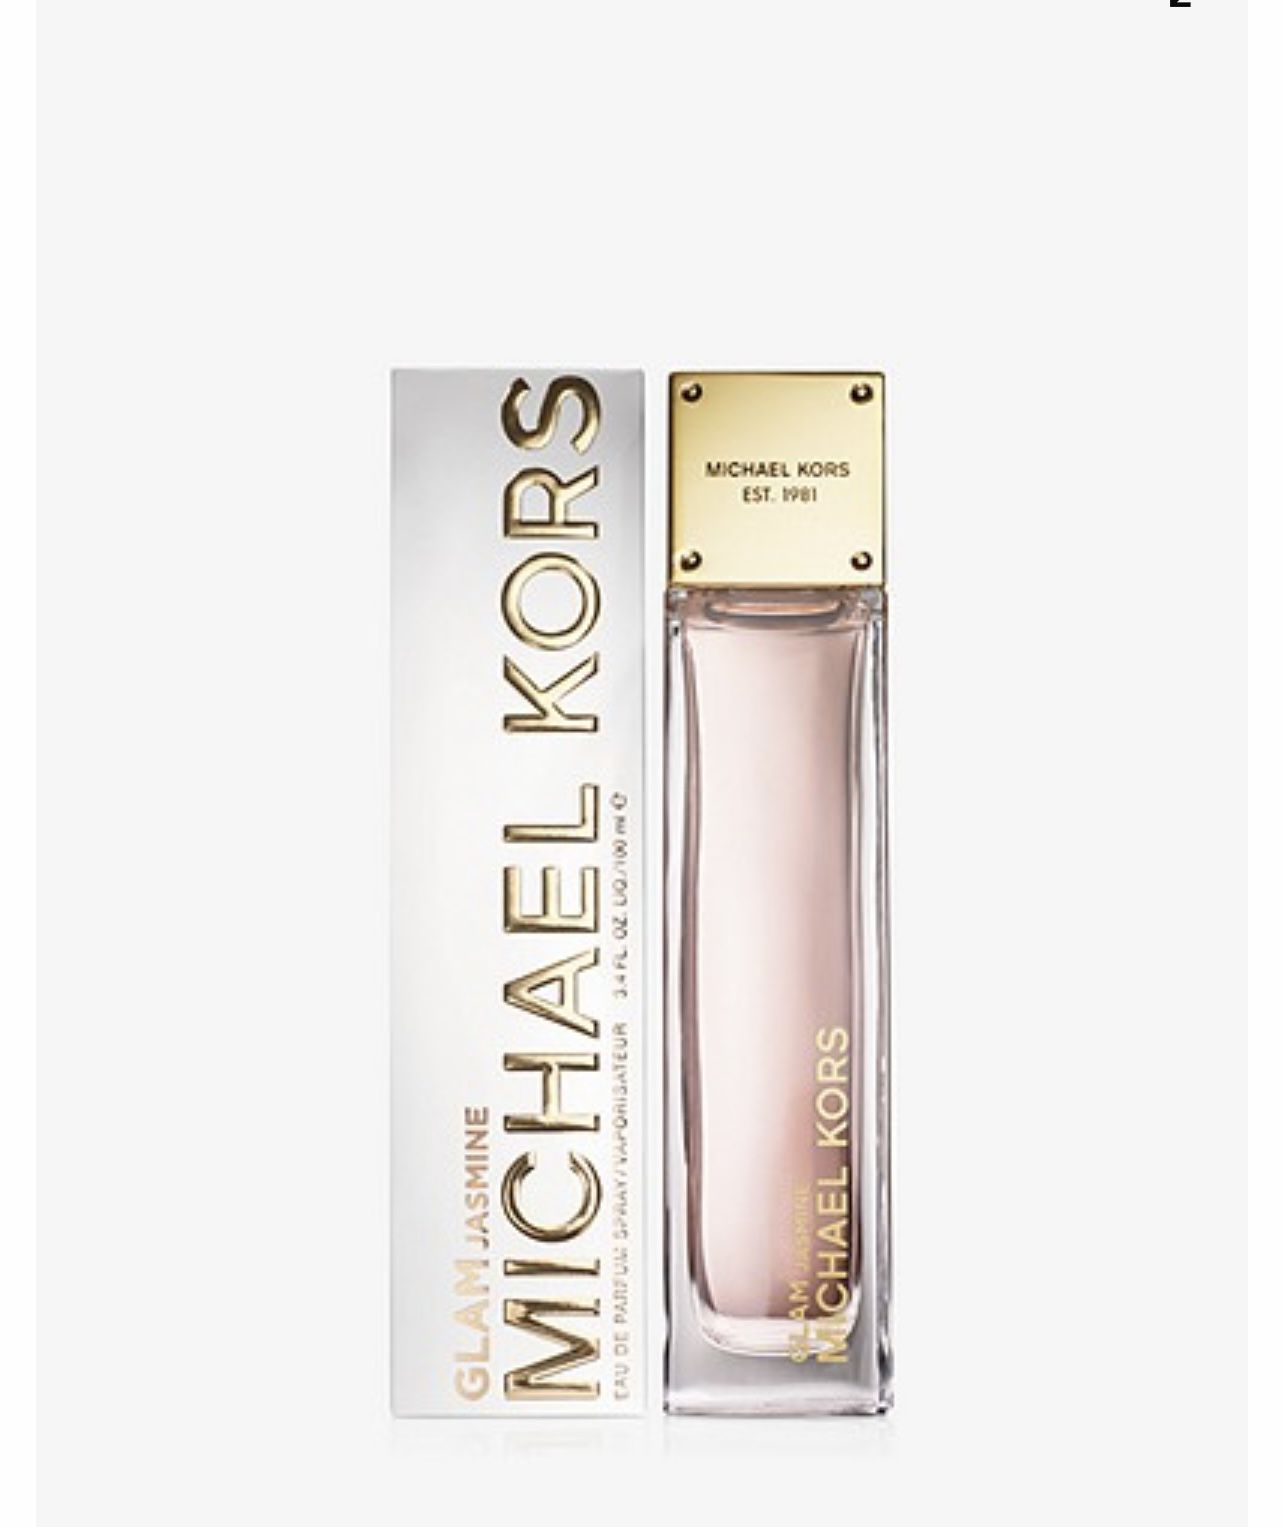 Michael Kors Jasmine perfume new in box with plastic